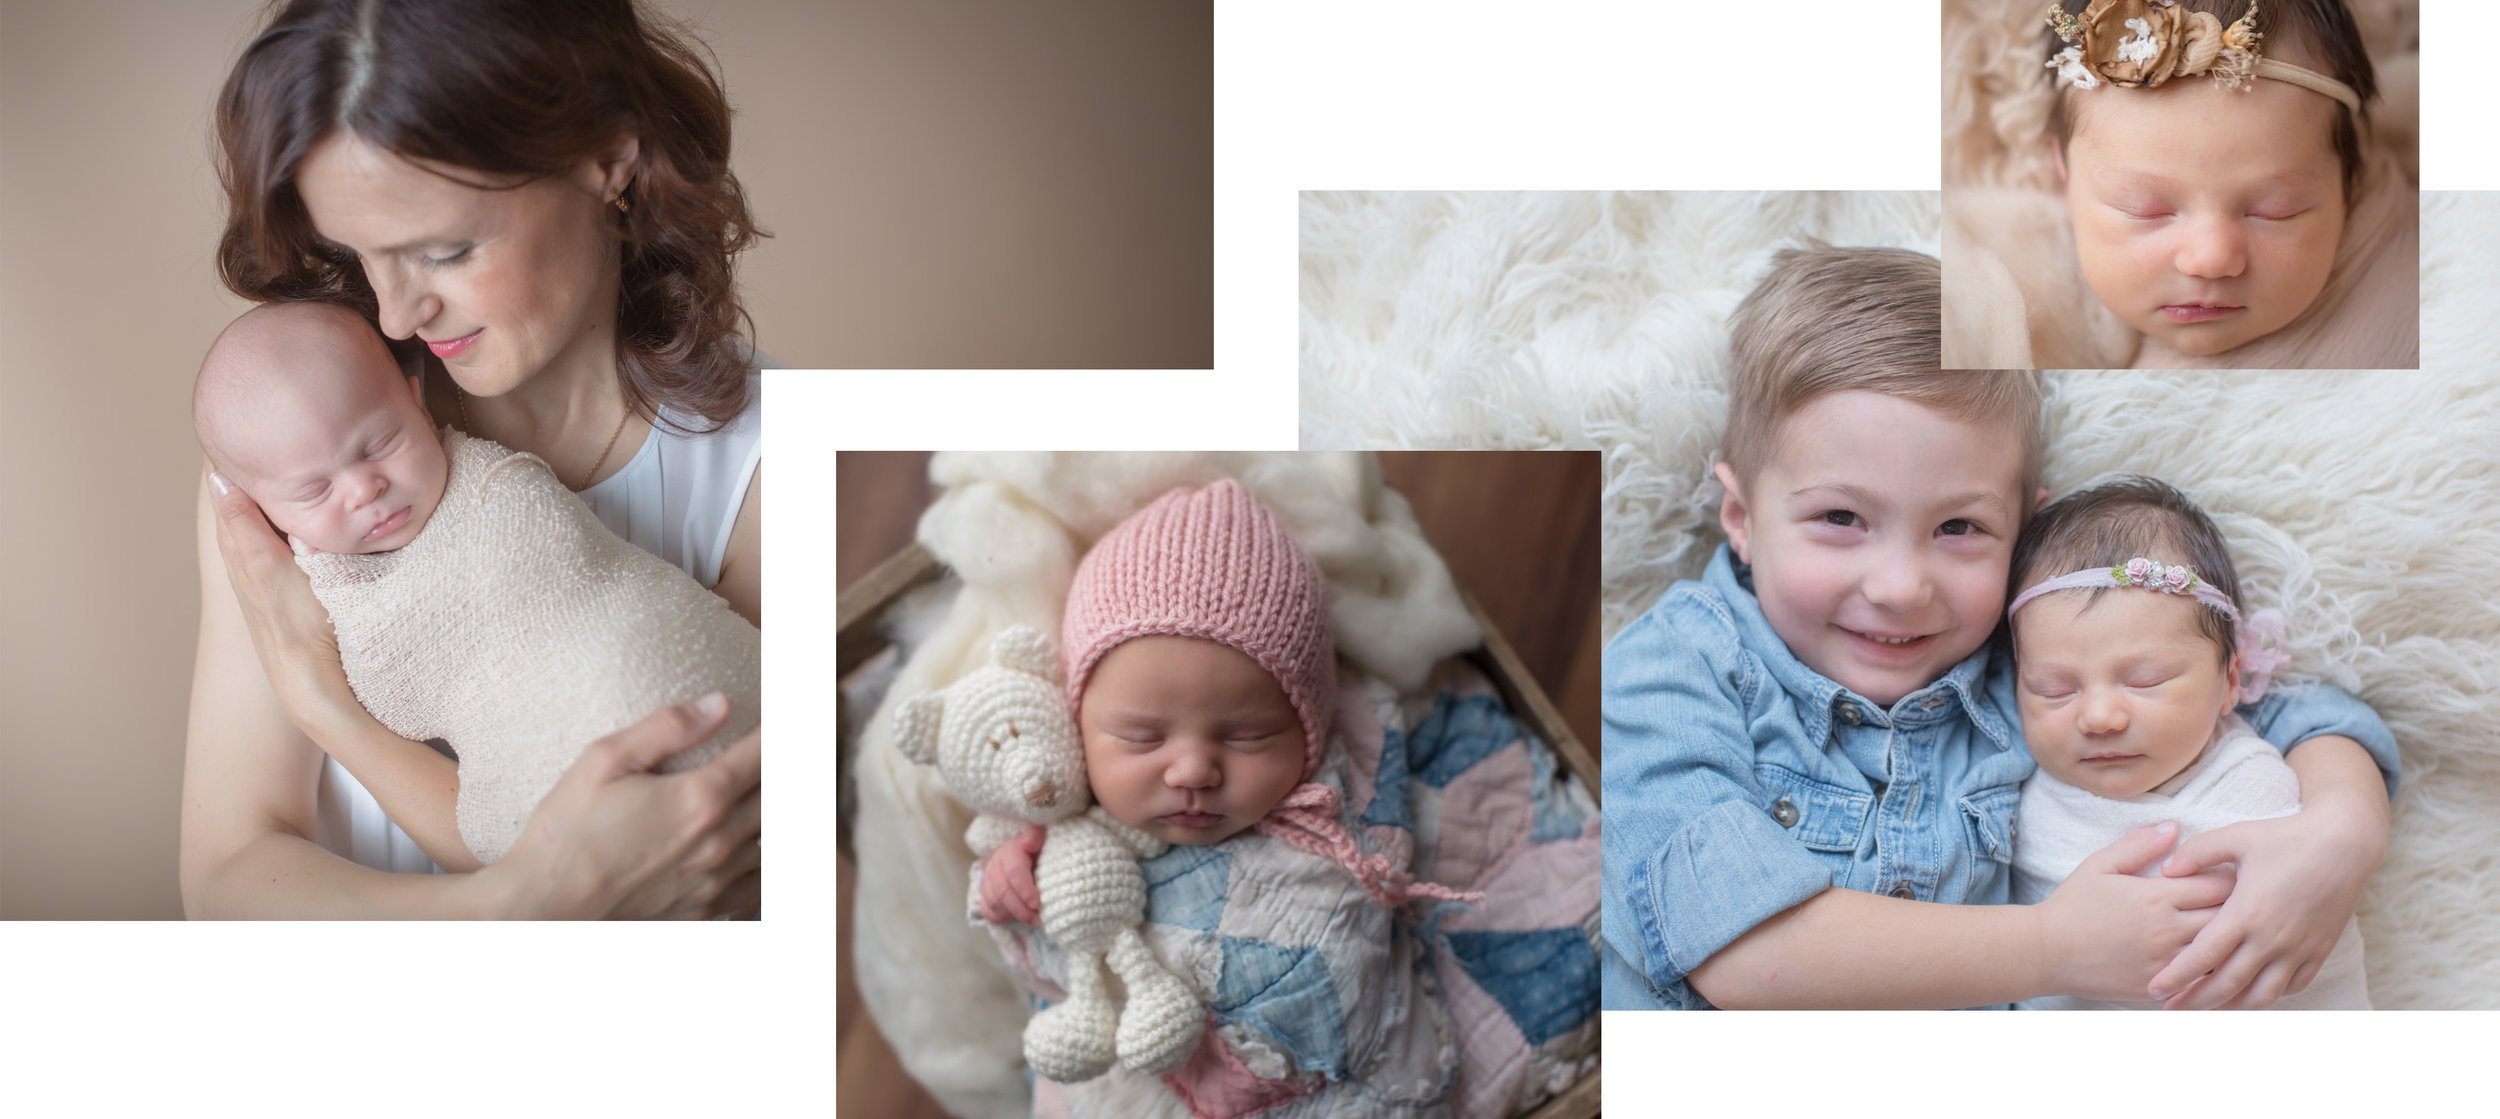 Flint baby photographer capturing professional photos